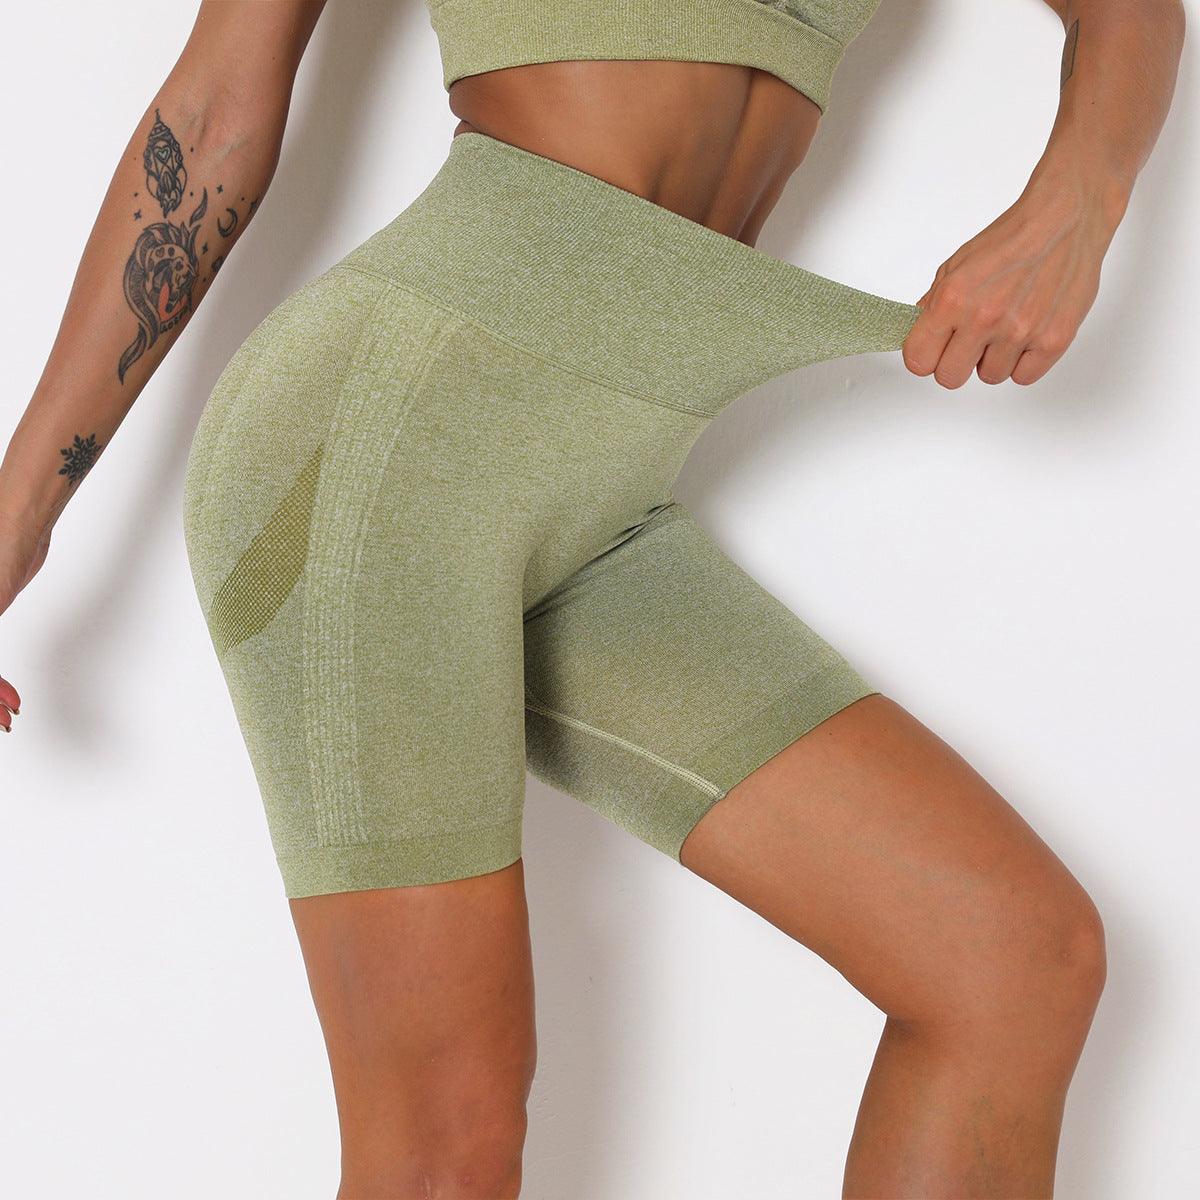 Skinny Hip Lift Yoga Shorts - ForVanity shorts, women's sports & entertainment Activewear Shorts